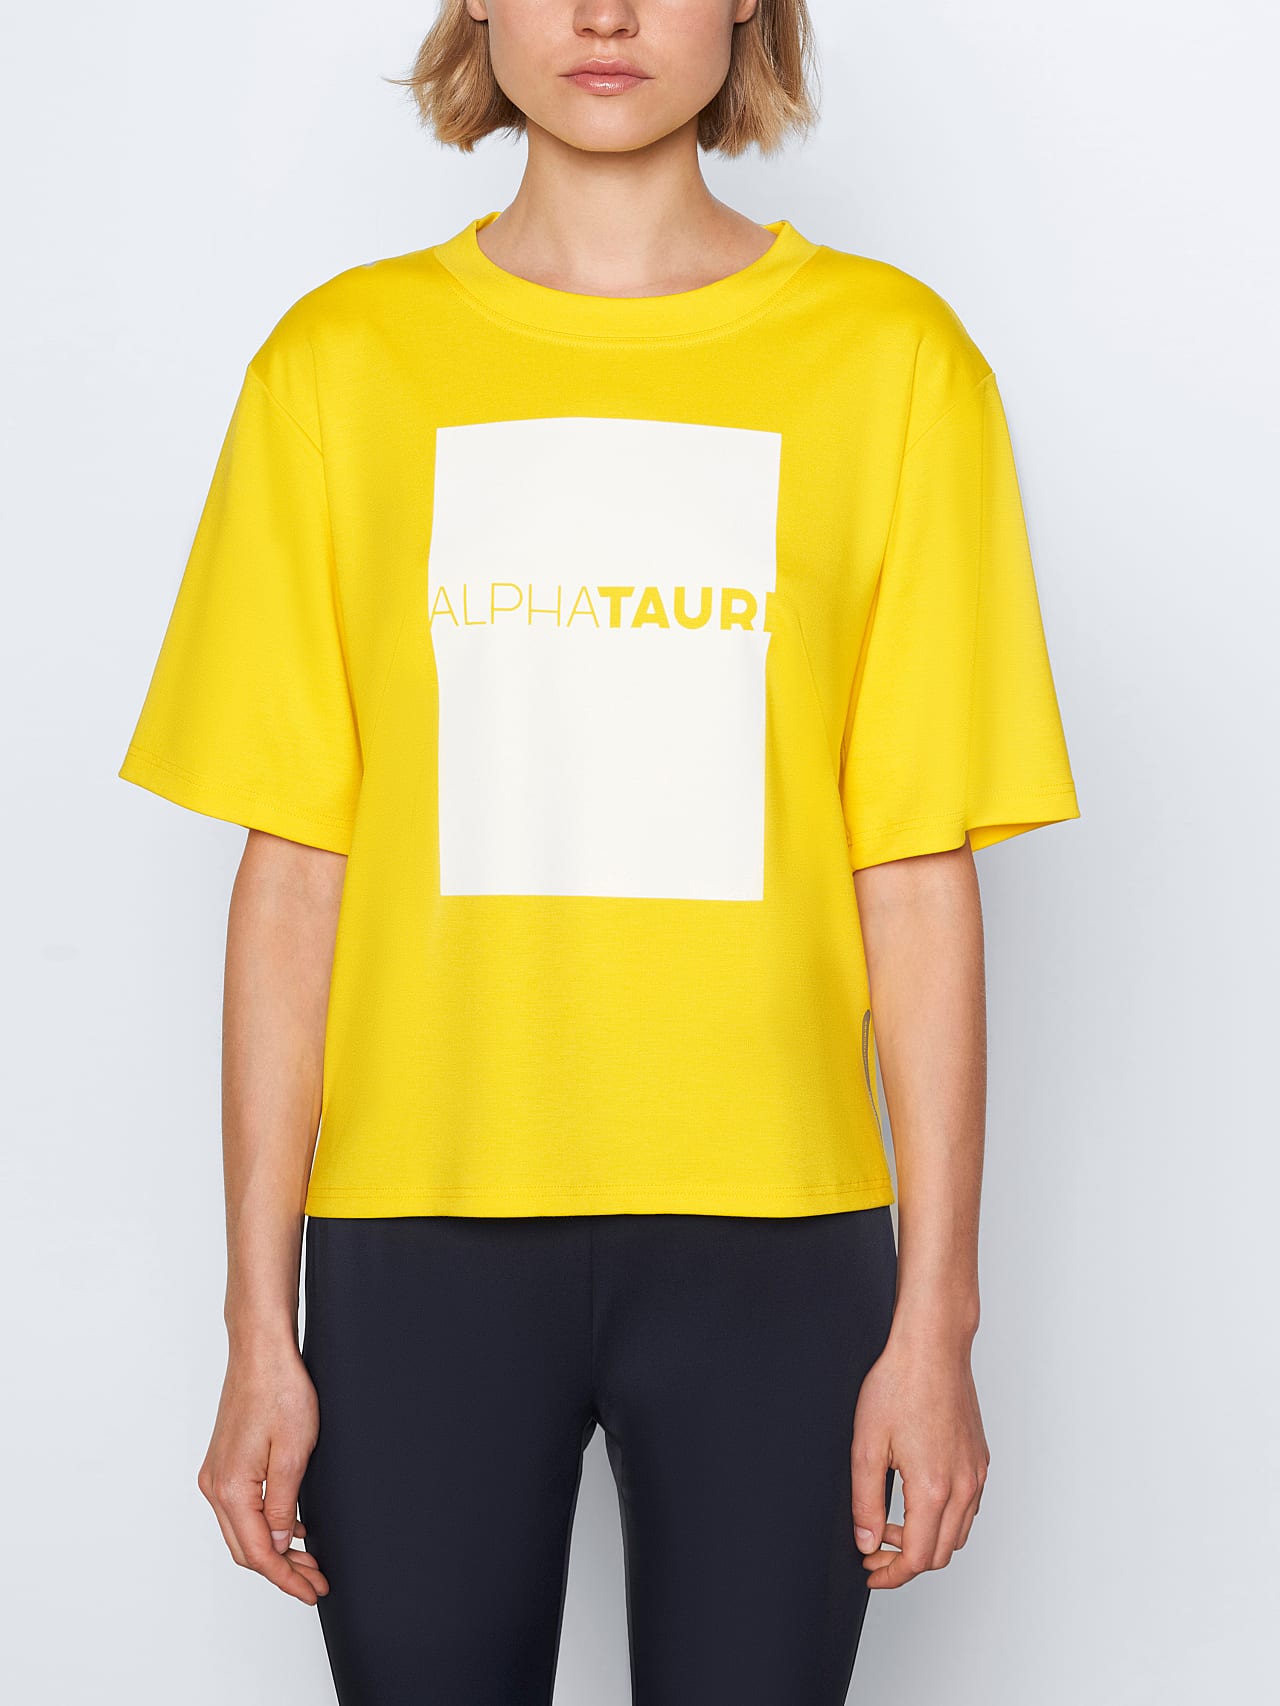 AlphaTauri | JASHU V1.Y5.02 | Heavy-Weight Logo T-Shirt in yellow for Women